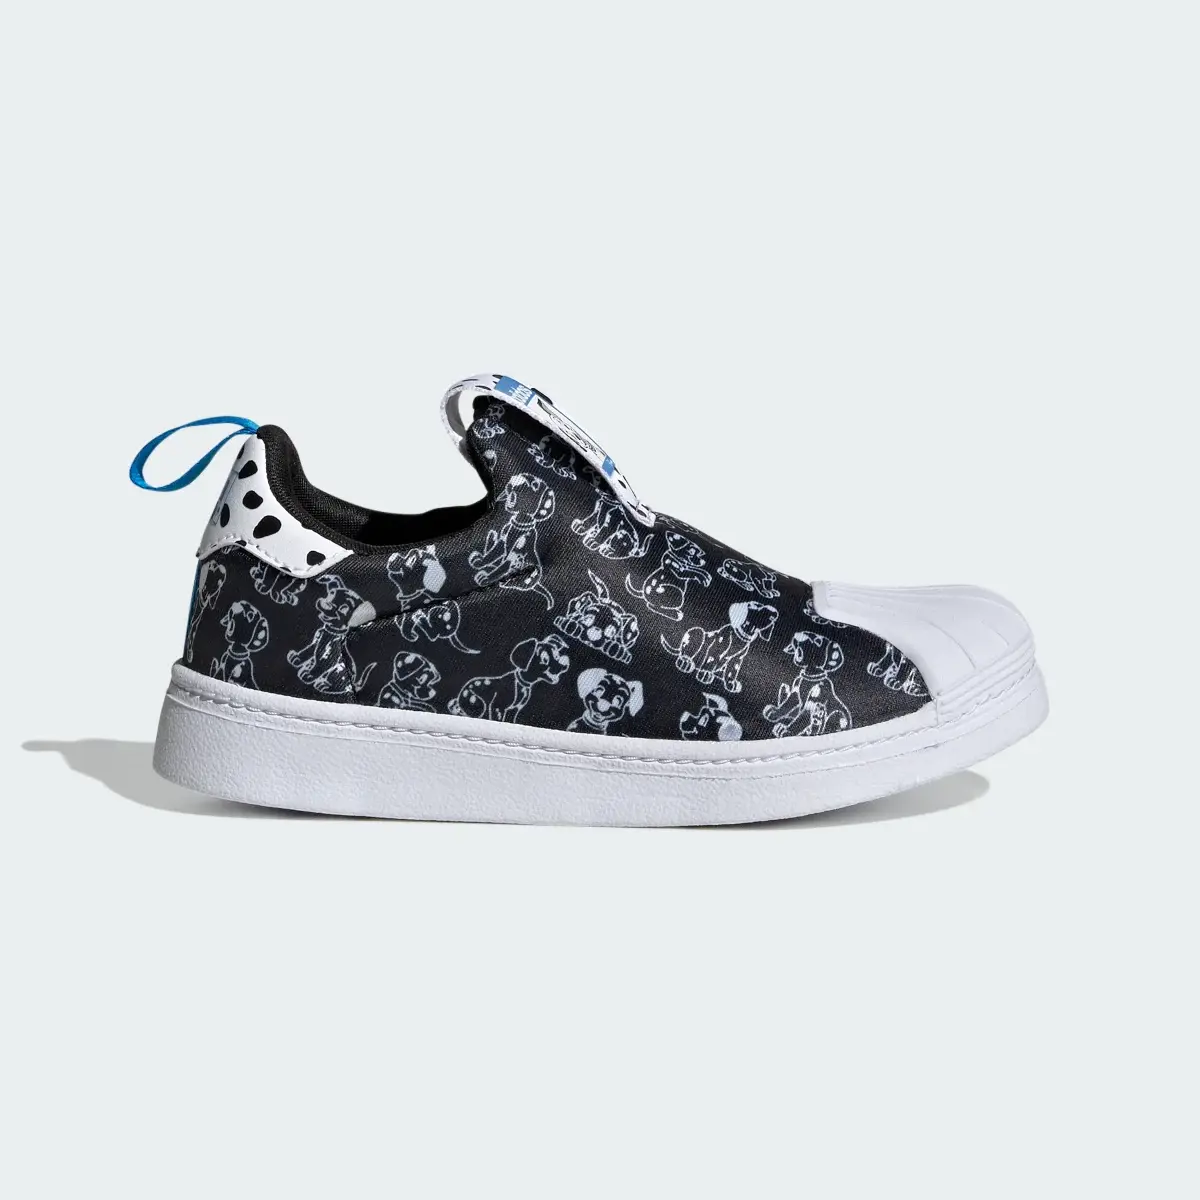 Adidas Originals x Disney 101 Dalmatians Superstar 360 Shoes Kids. 2